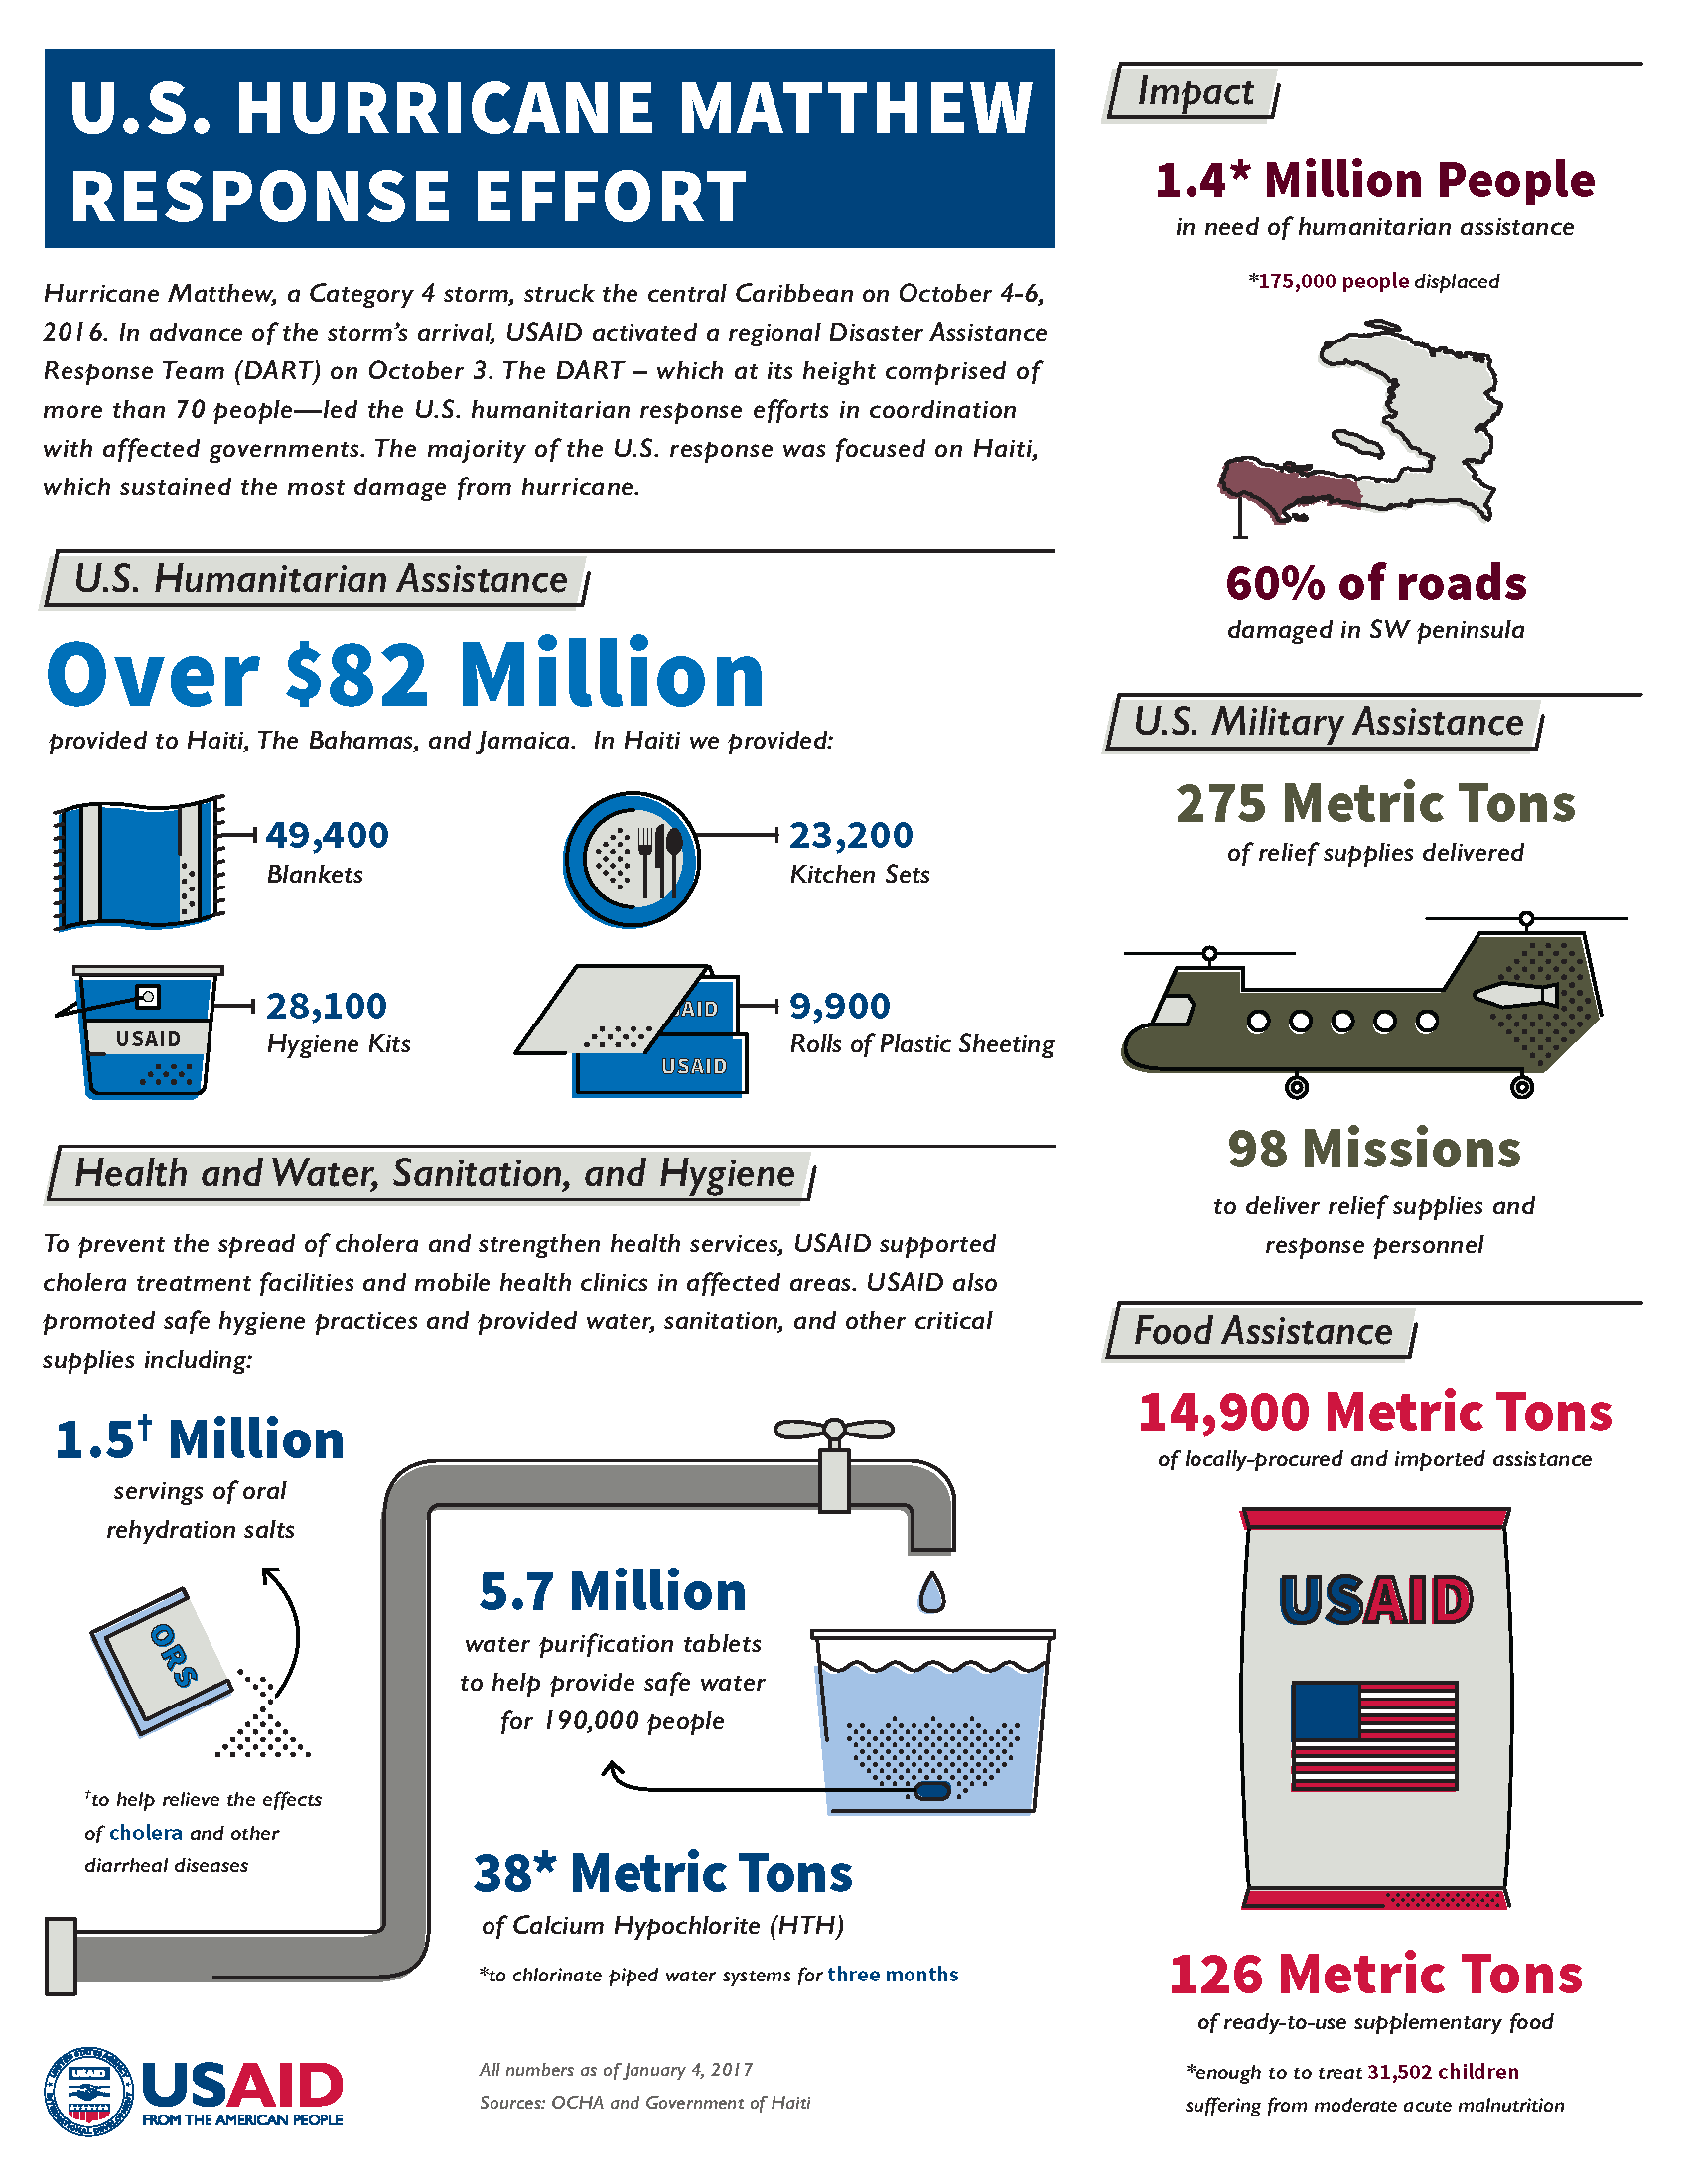 U.S. Hurricane Matthew Response Effort Infographic